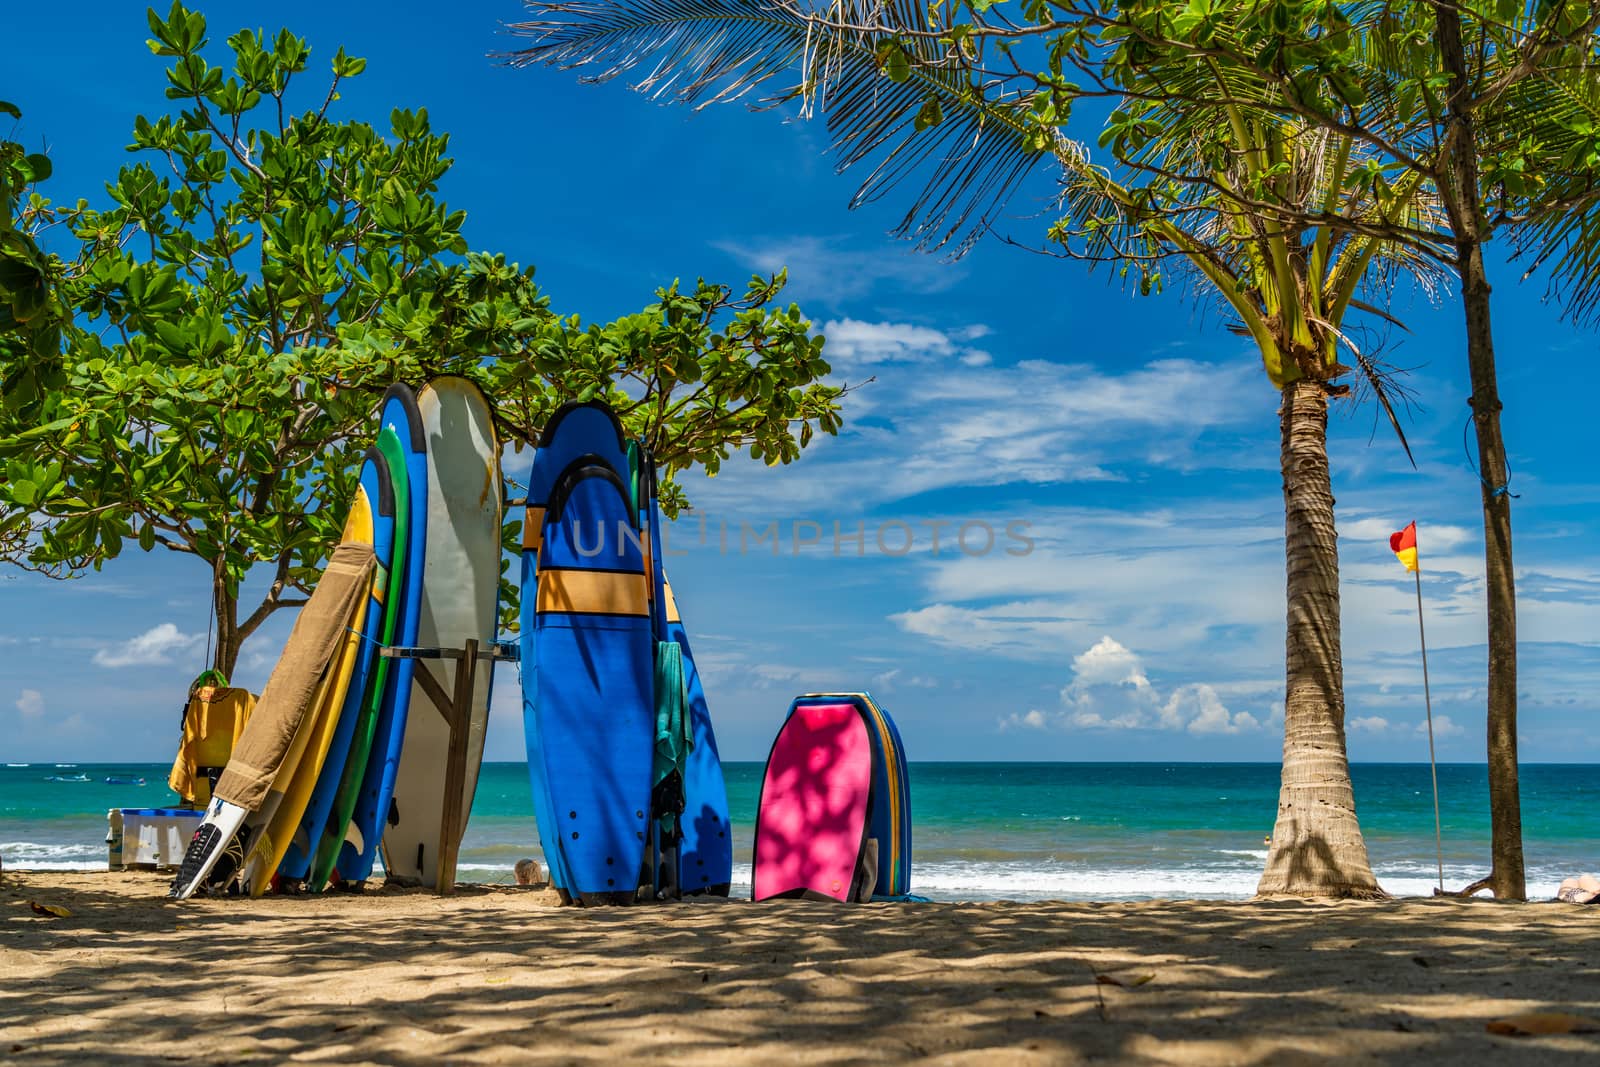 Surf boards on the beach in Kuta Bali Indonesia